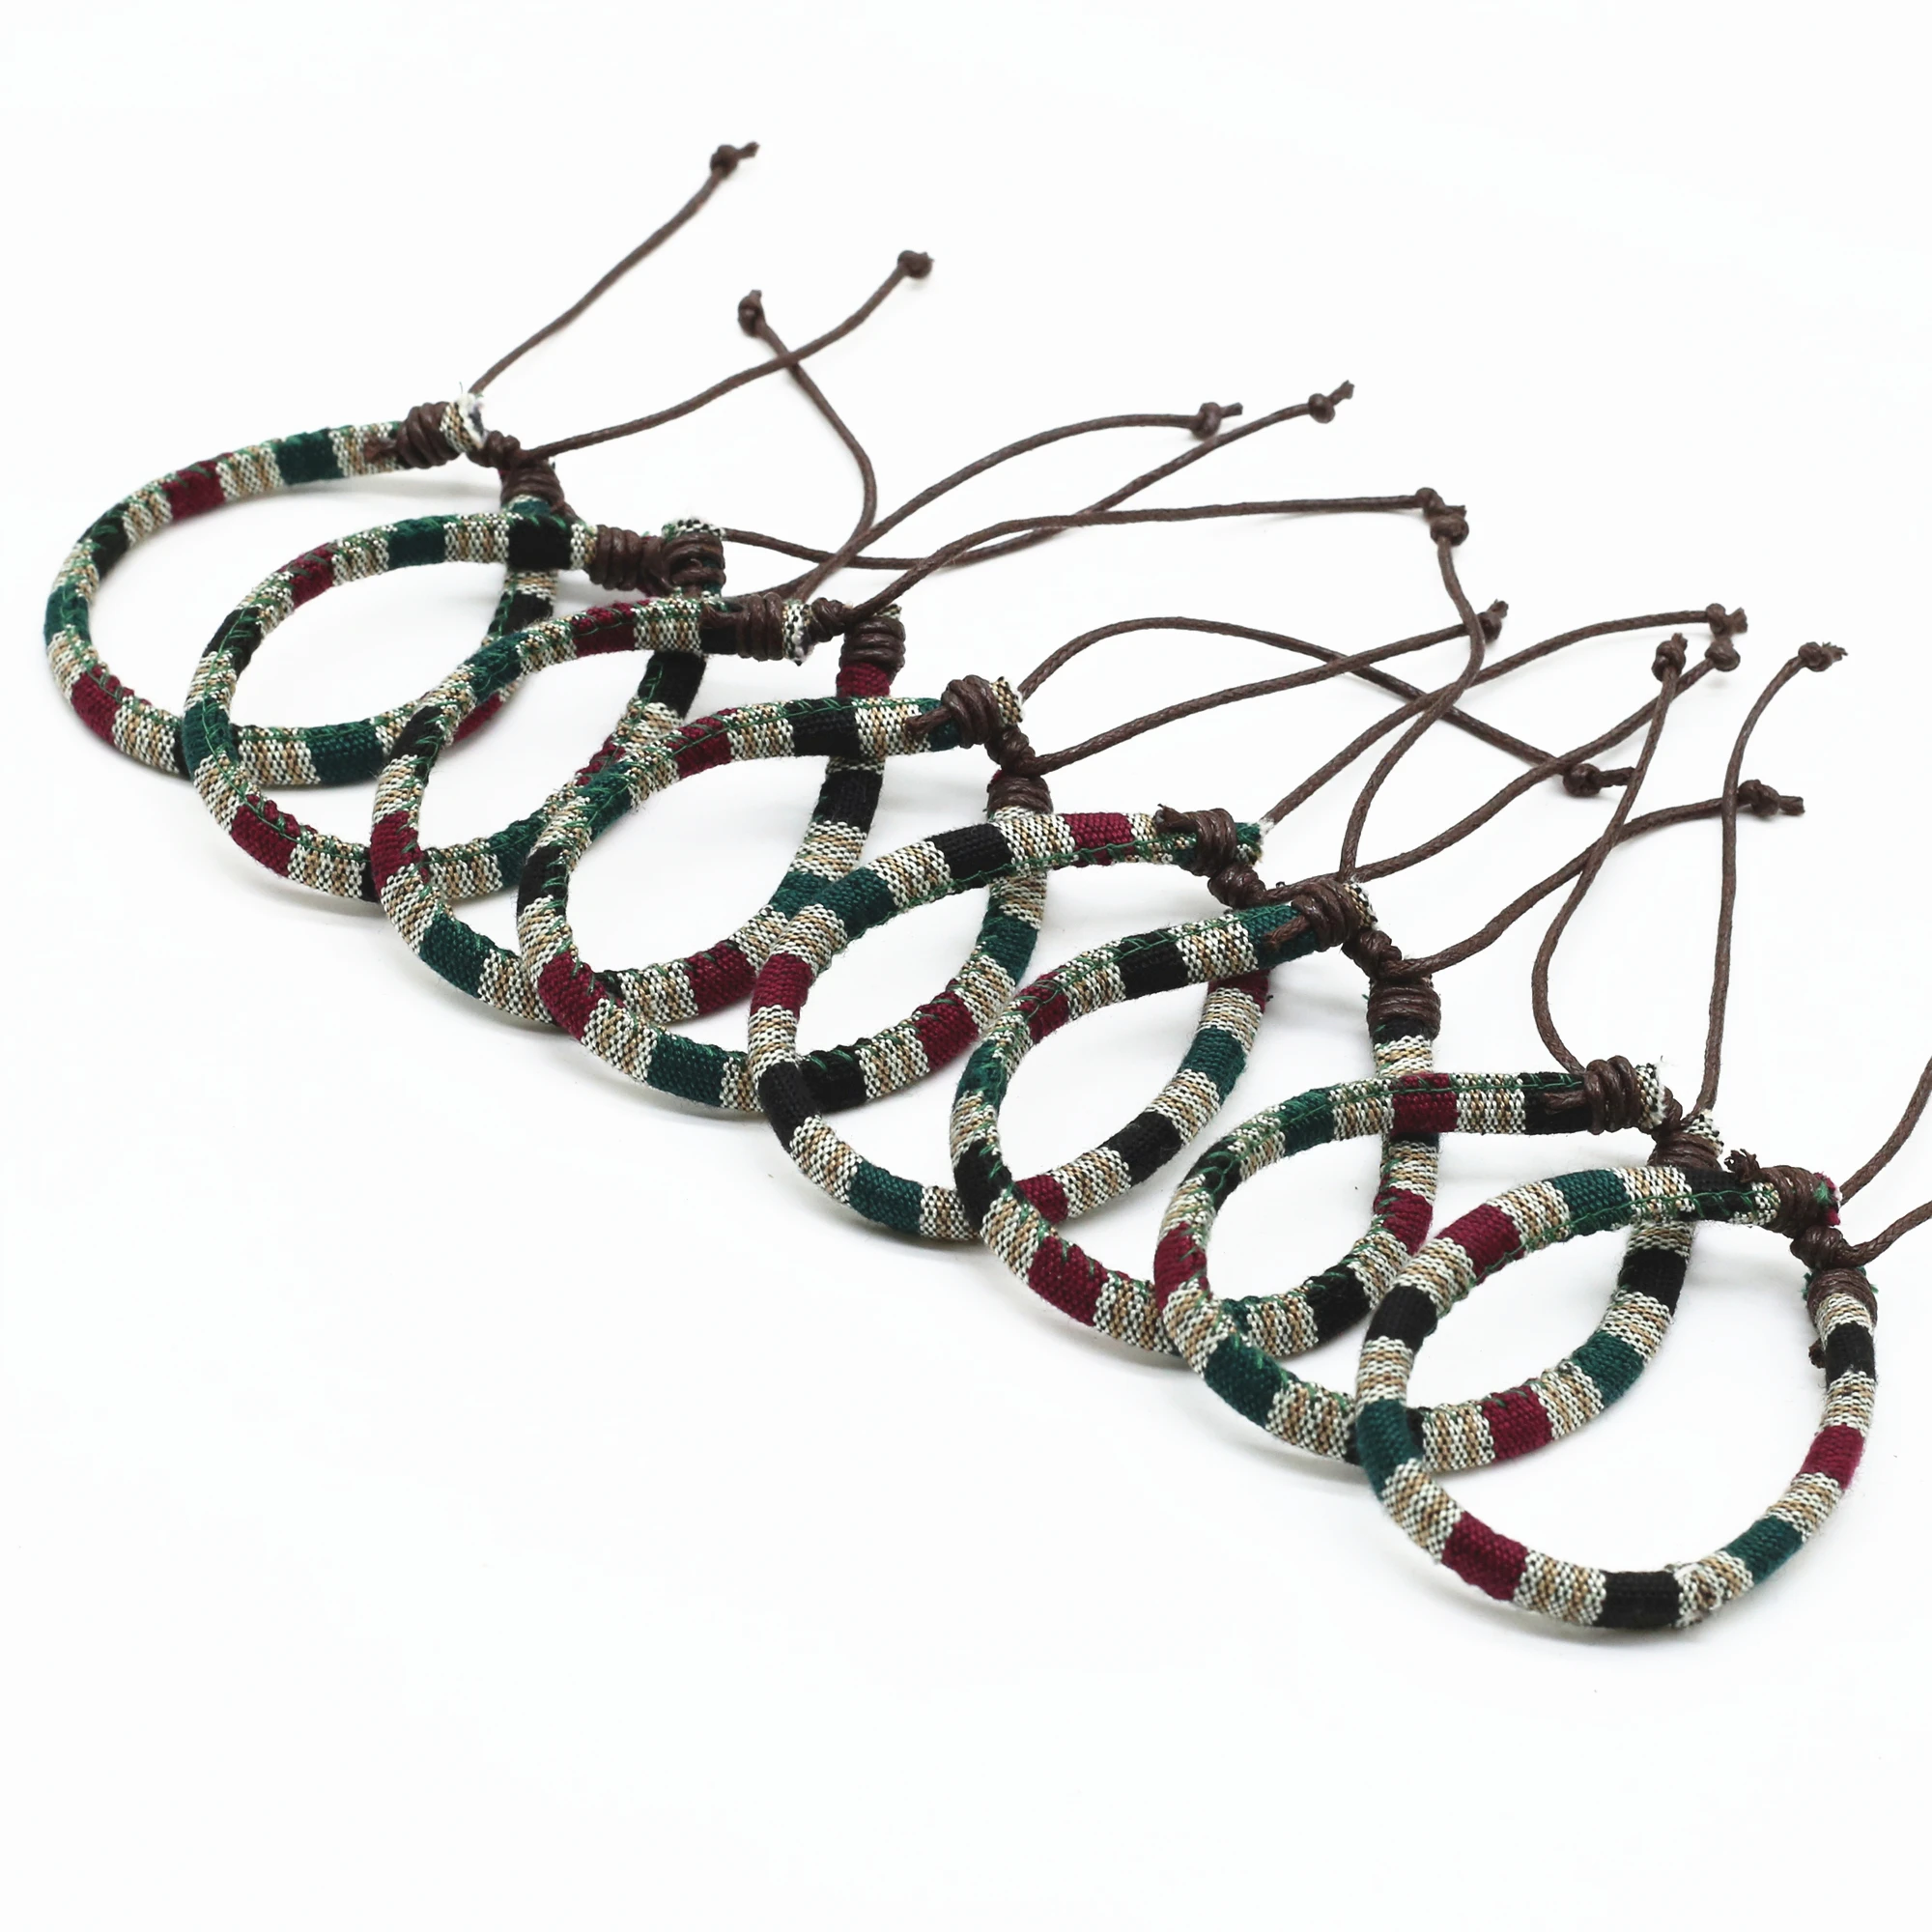 WestBull Wholesale Multicolor Ethnic Men Rope Handmade Woven Bracelets For Women Pulsera Femme Homme Male Gift Jewelry